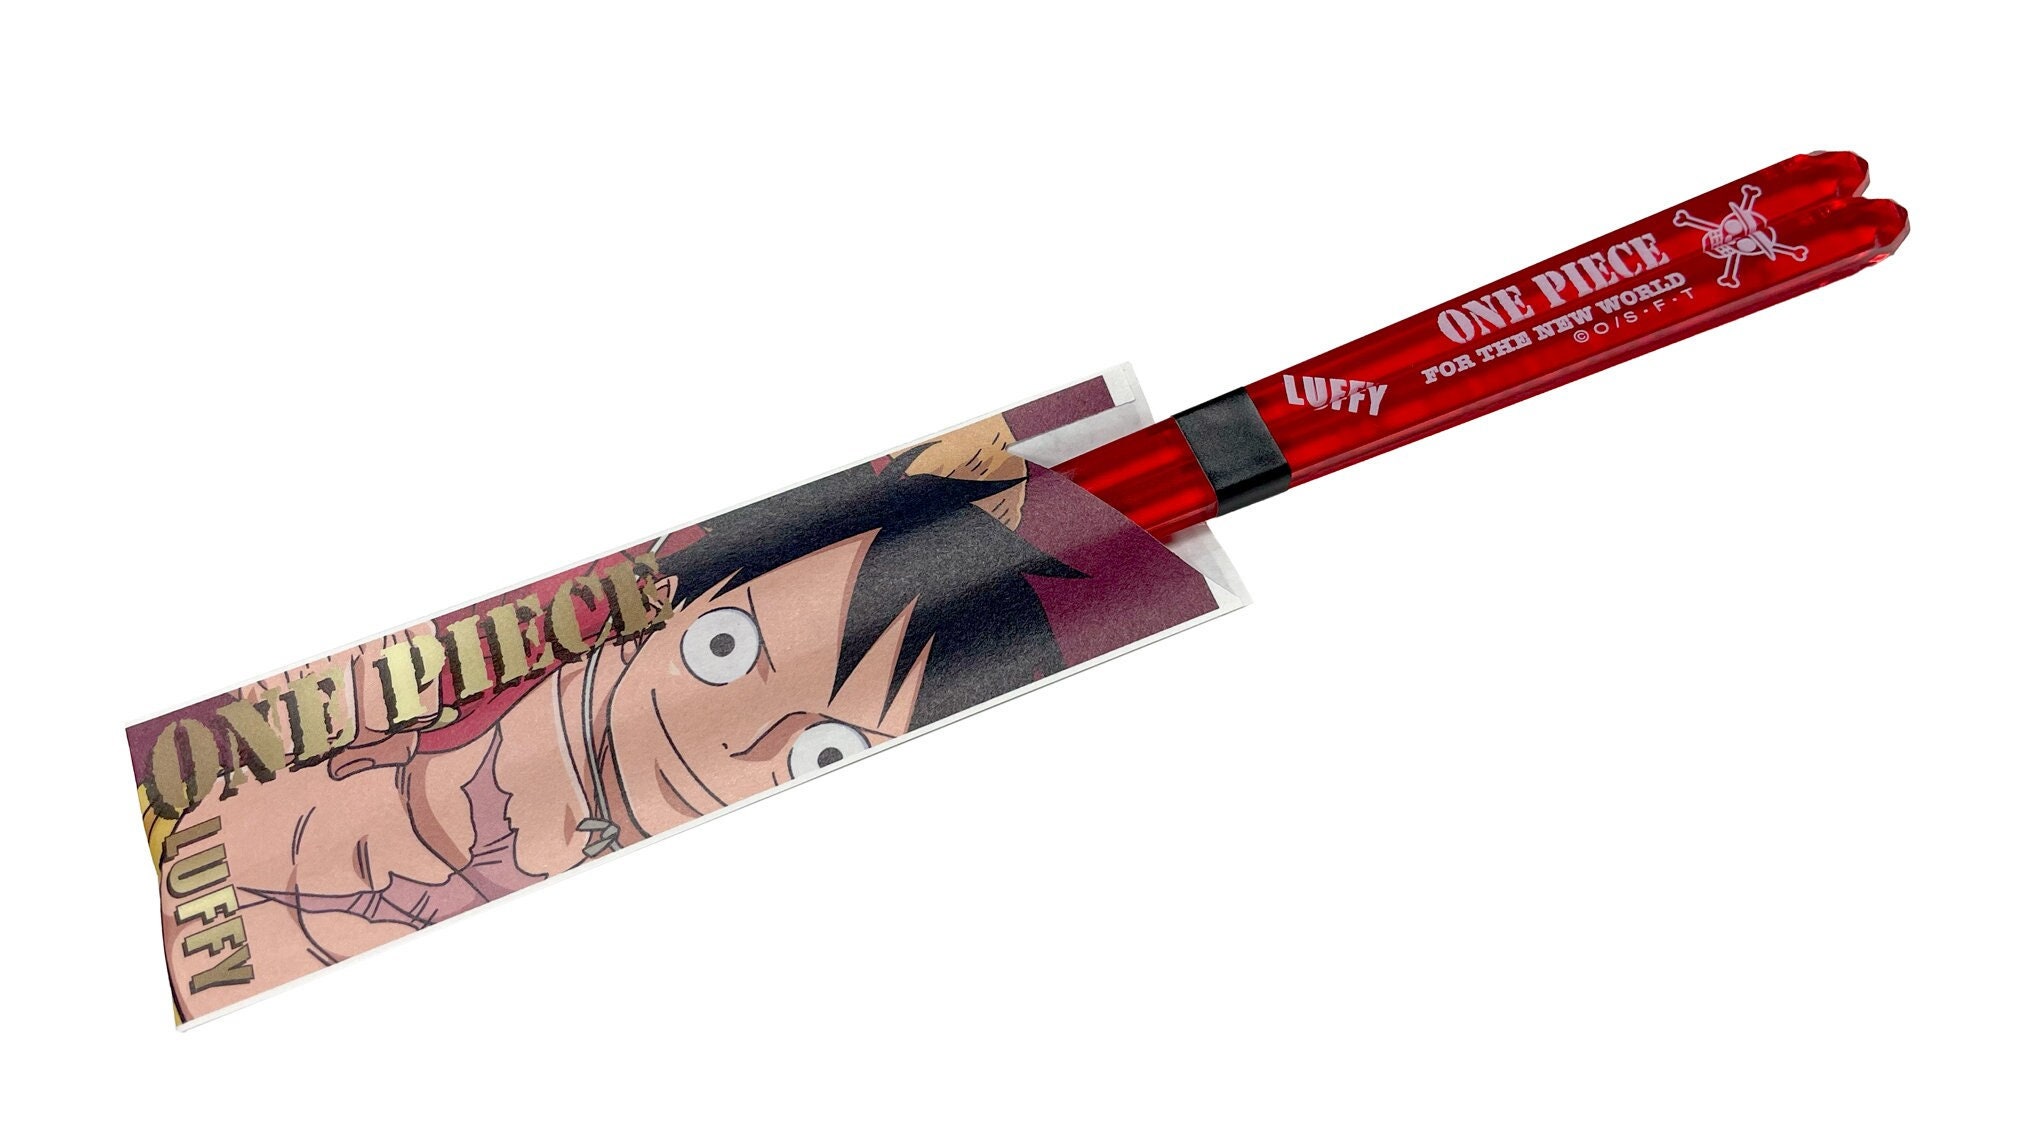 Anime One Piece Ramen Bowl Set with Chopsticks - Luffy Straw Hat Design for  N